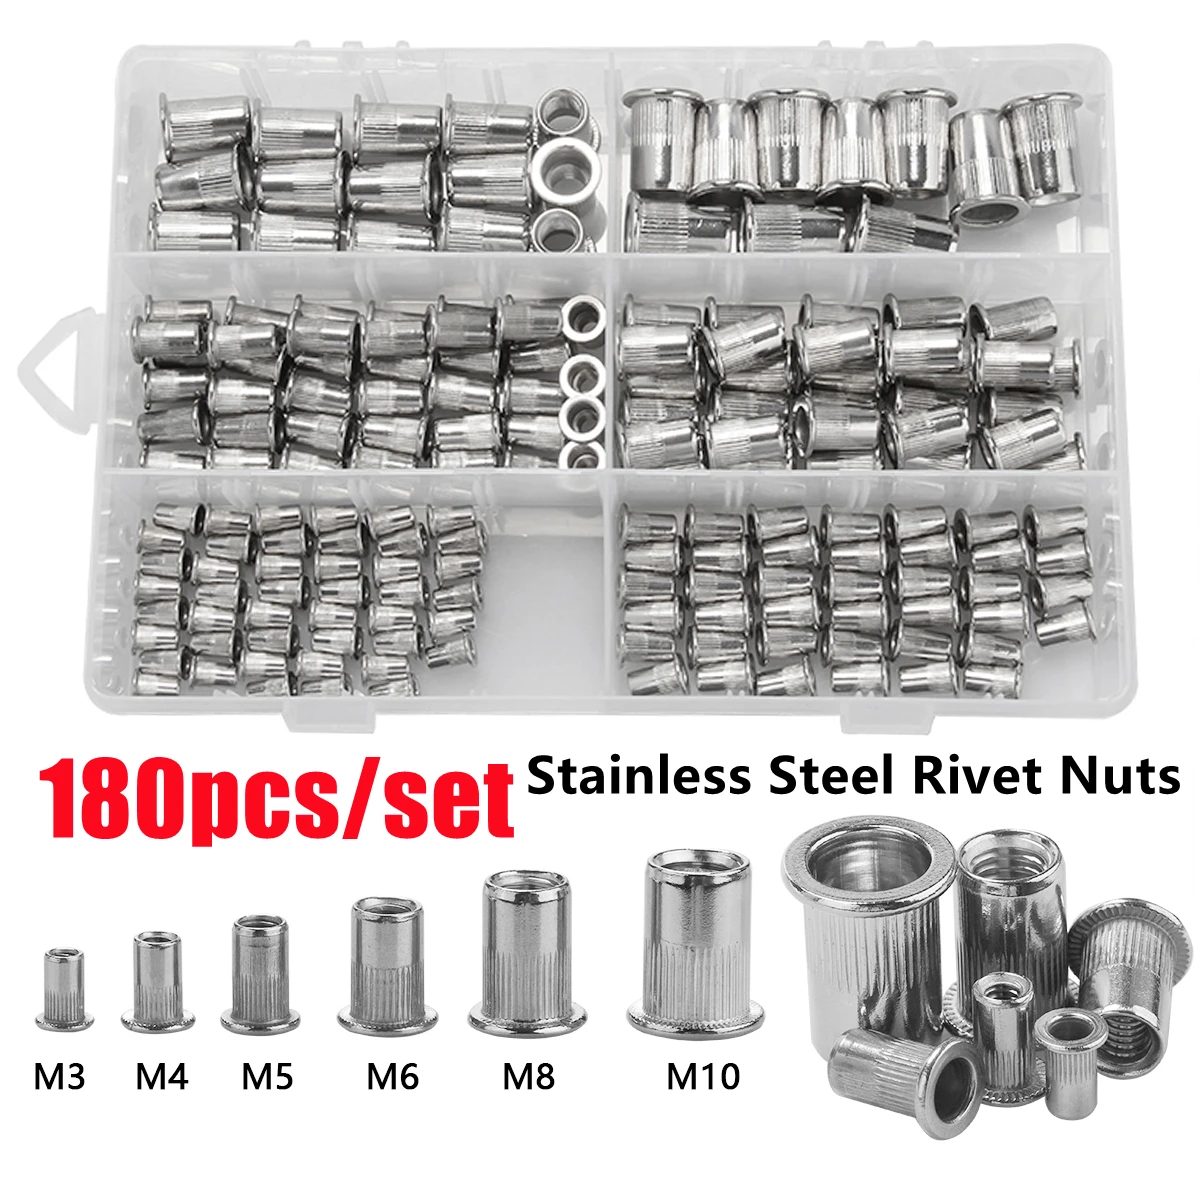 

180/100Pcs Stainless Steel Rivet Nuts Flat Head Rivet Nuts Set Nuts Insert Riveting M3 M4 M5 M6 M8 M10 Nut Sets Kit